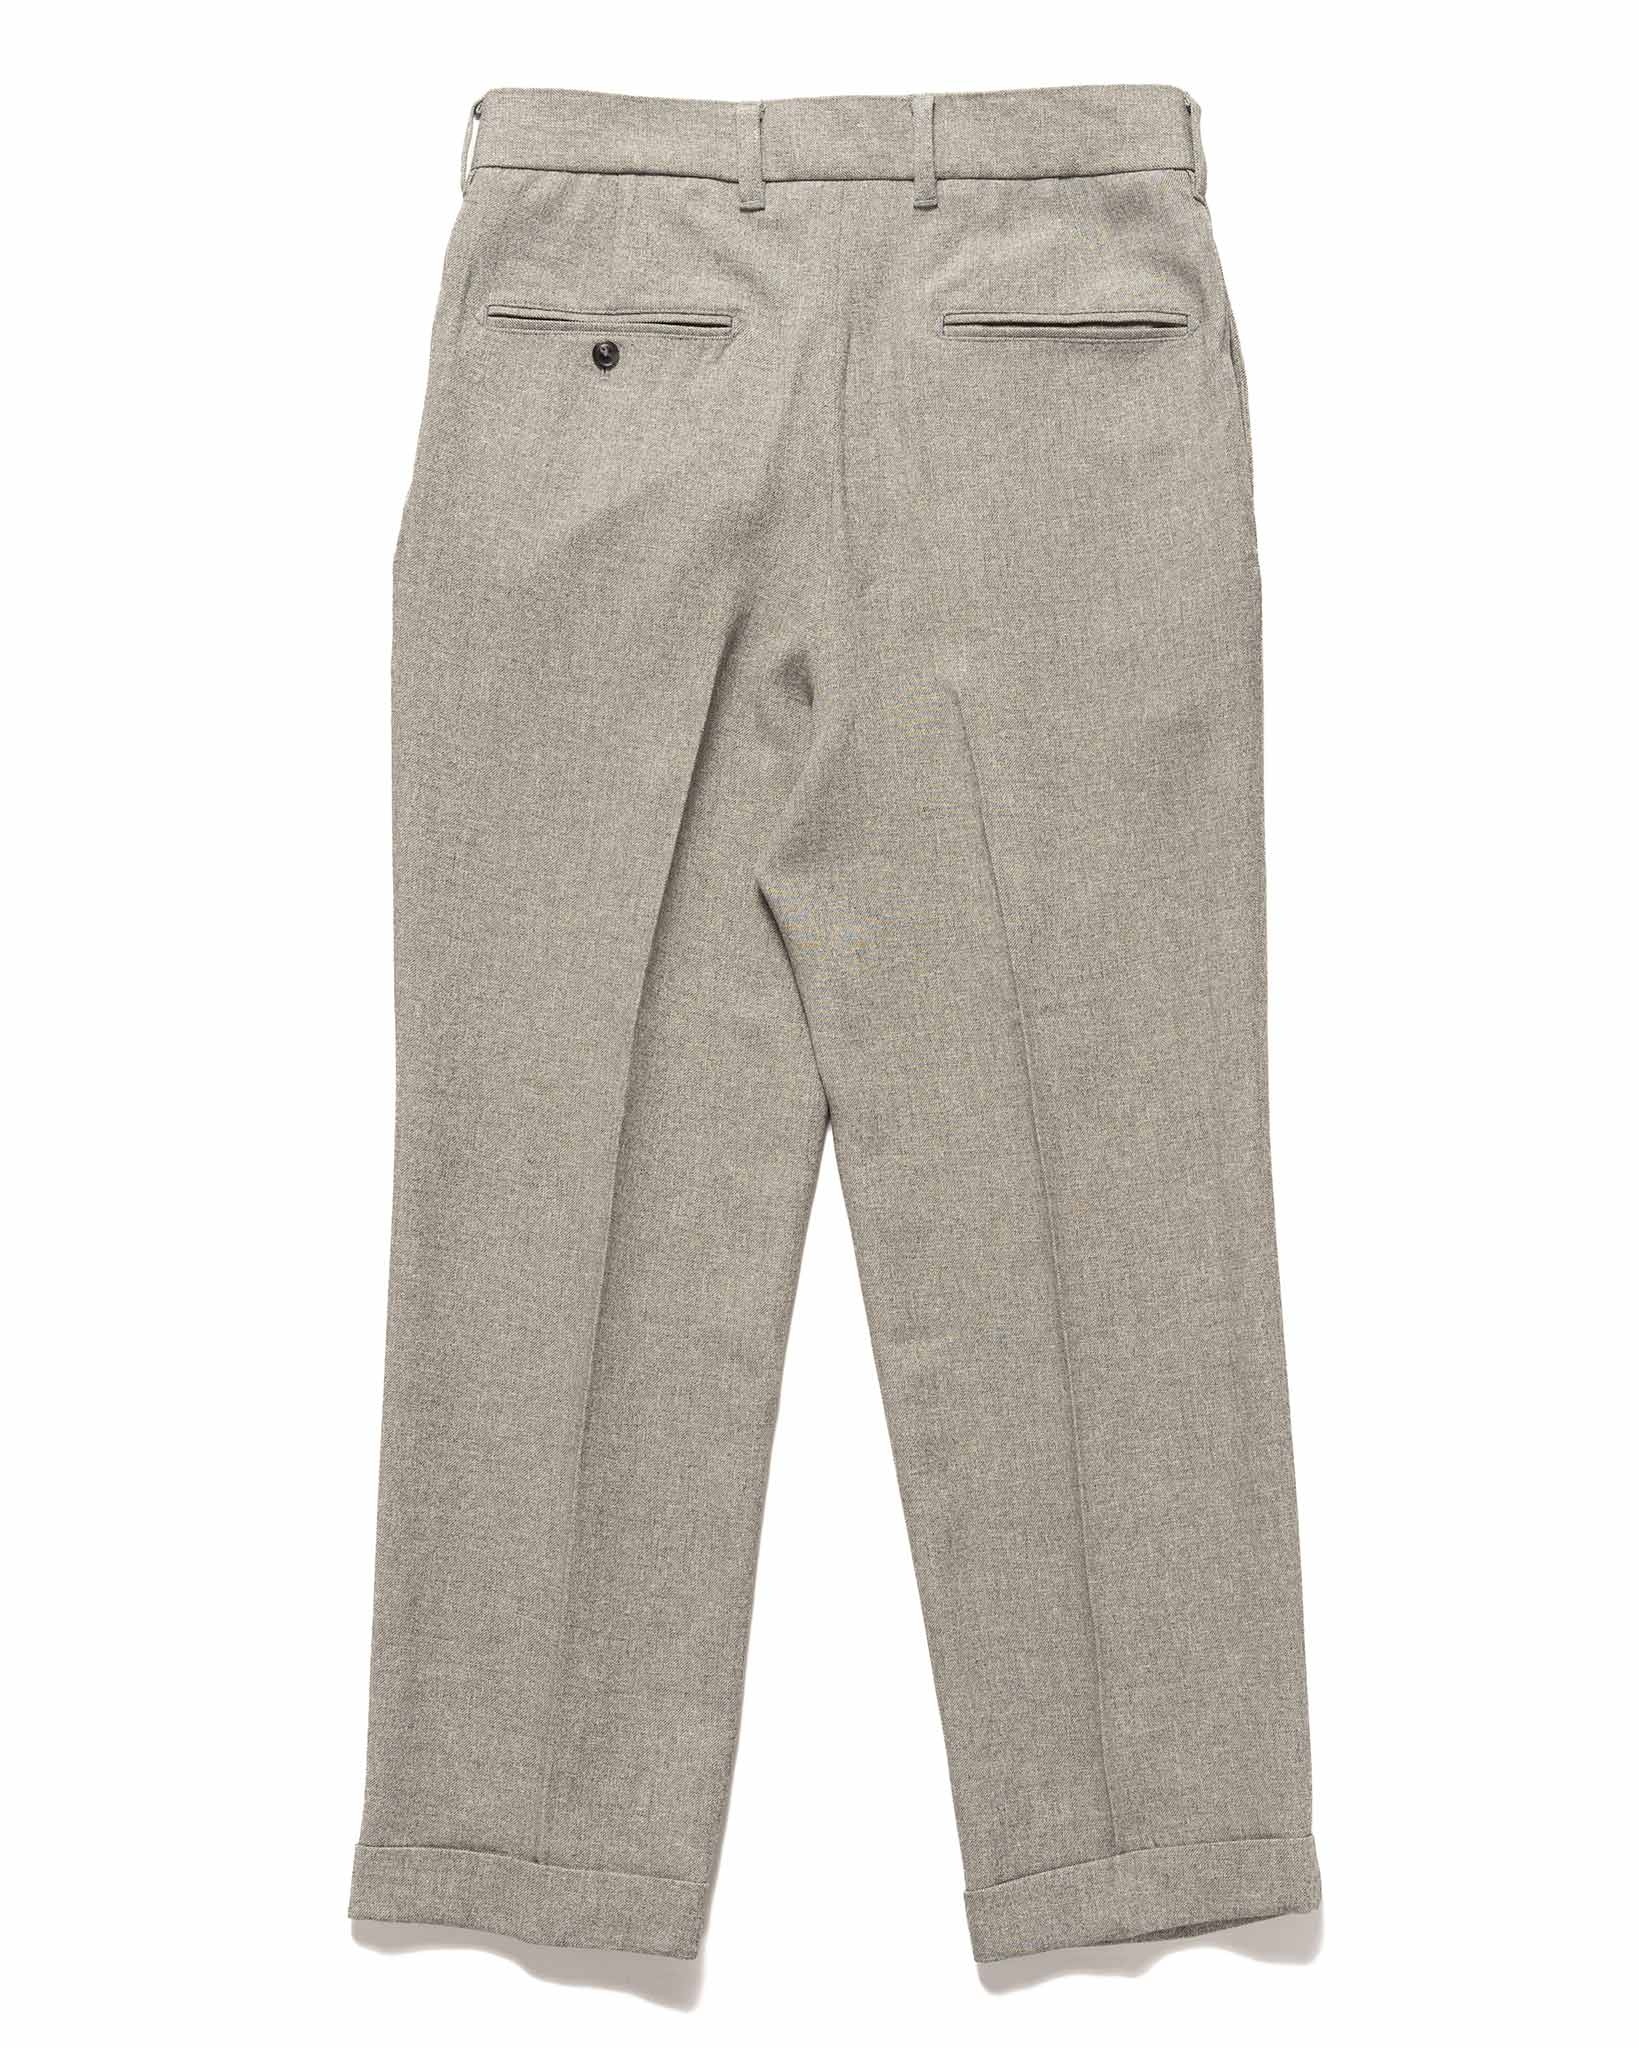 Tucked Trouser - PE/PU Stretch Twill Lt.Grey - 5